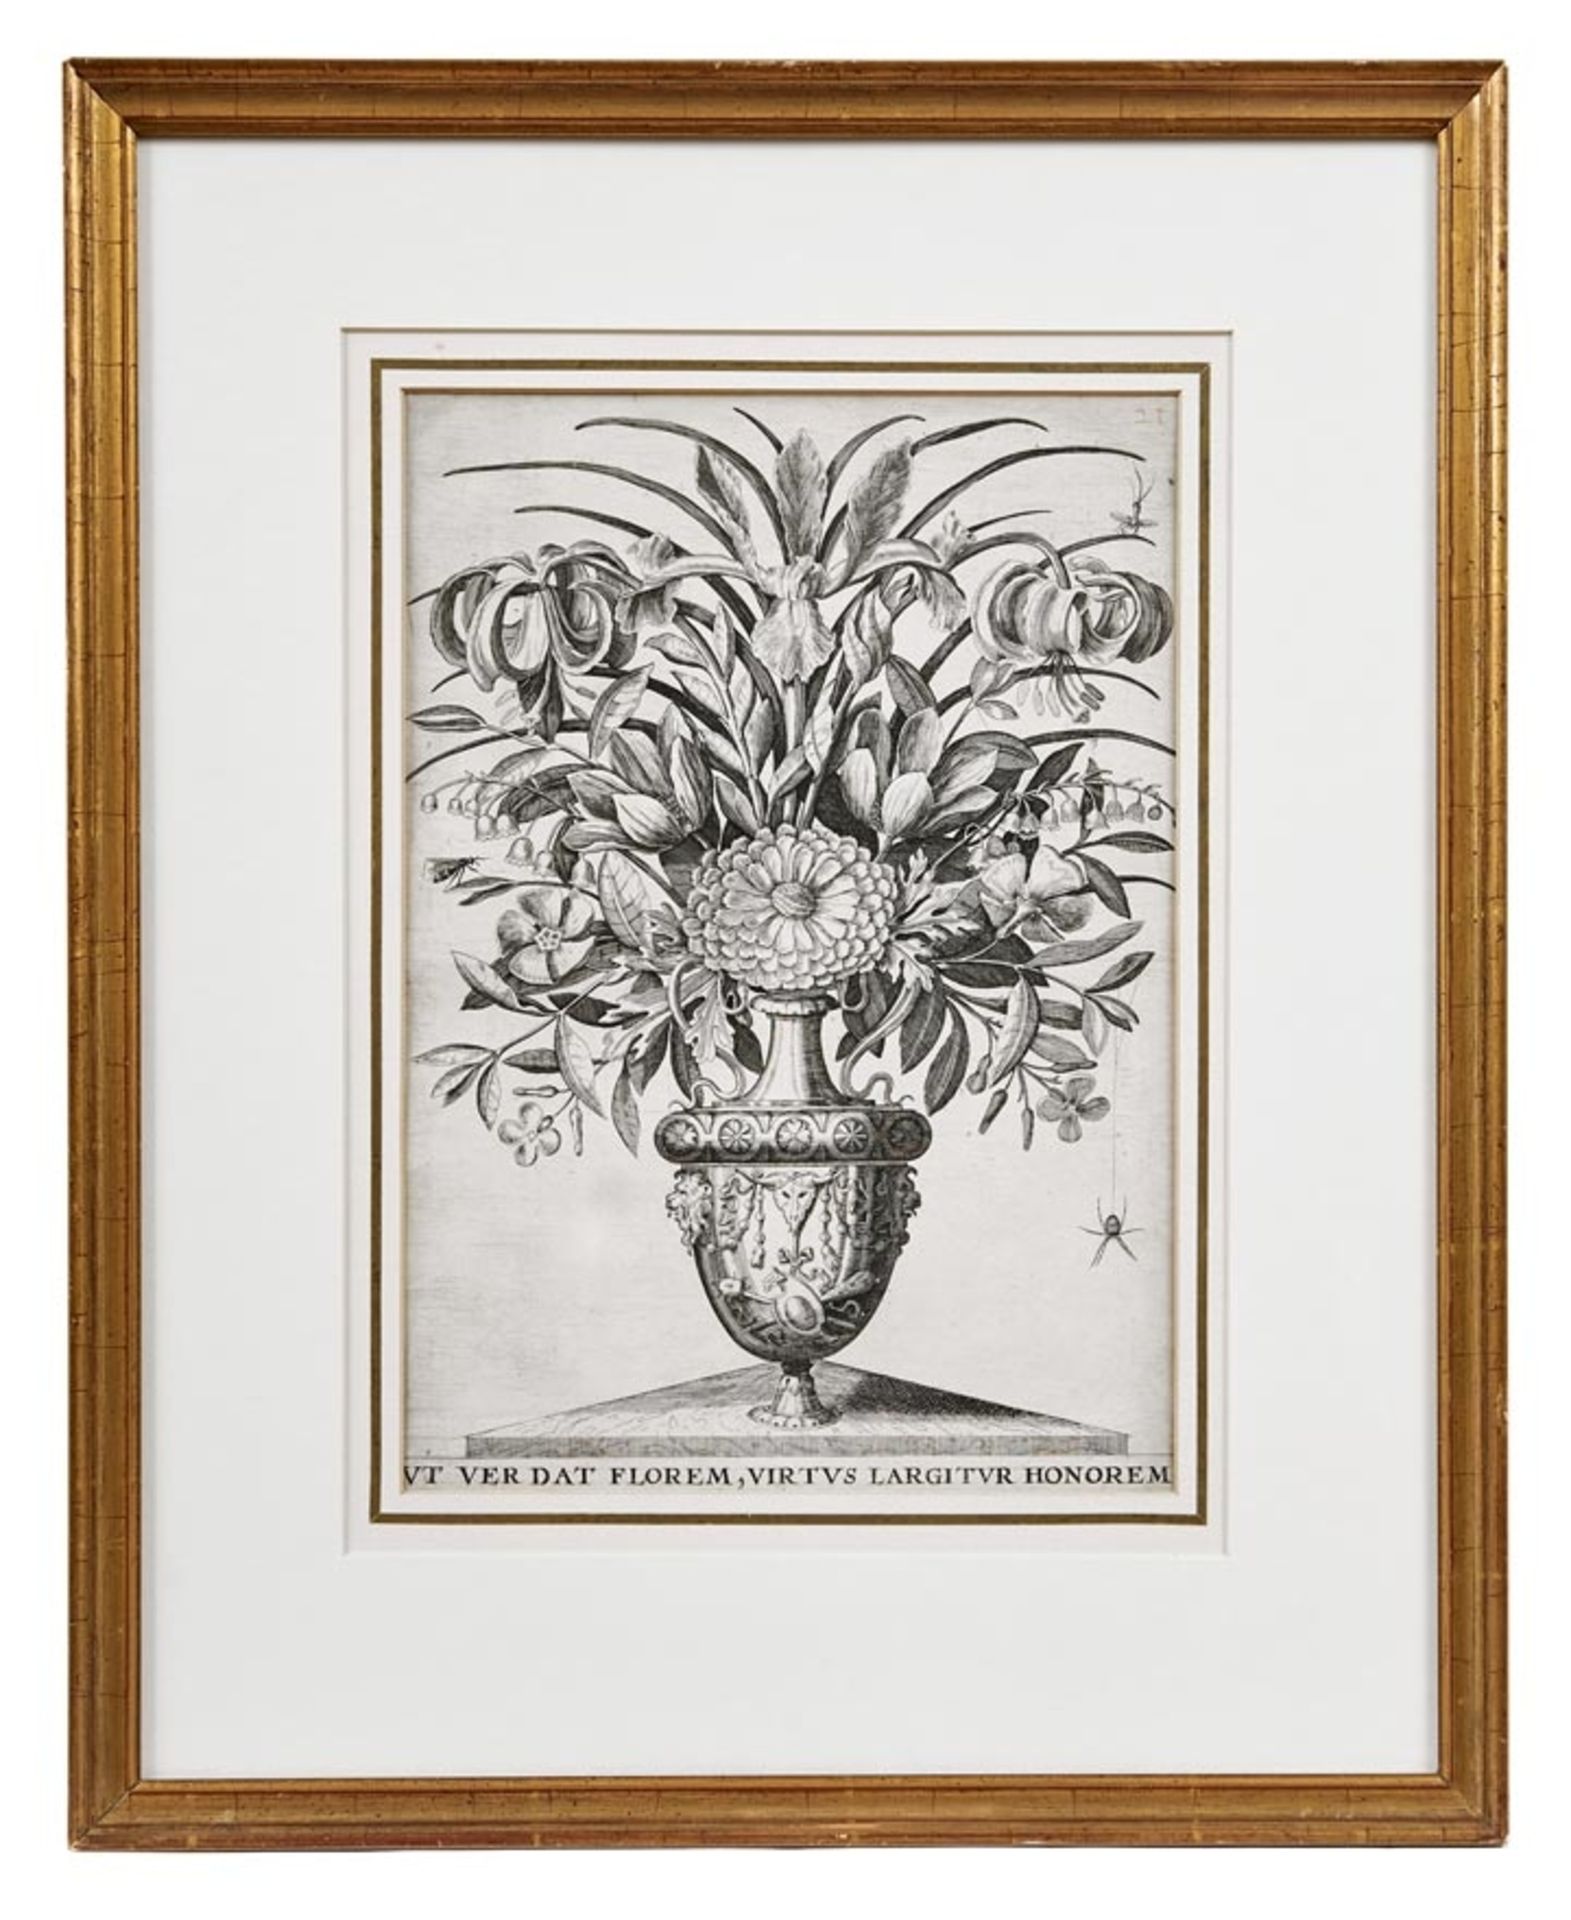 Bry, Johann Theodor de: Blumenbouquet in Ziervase